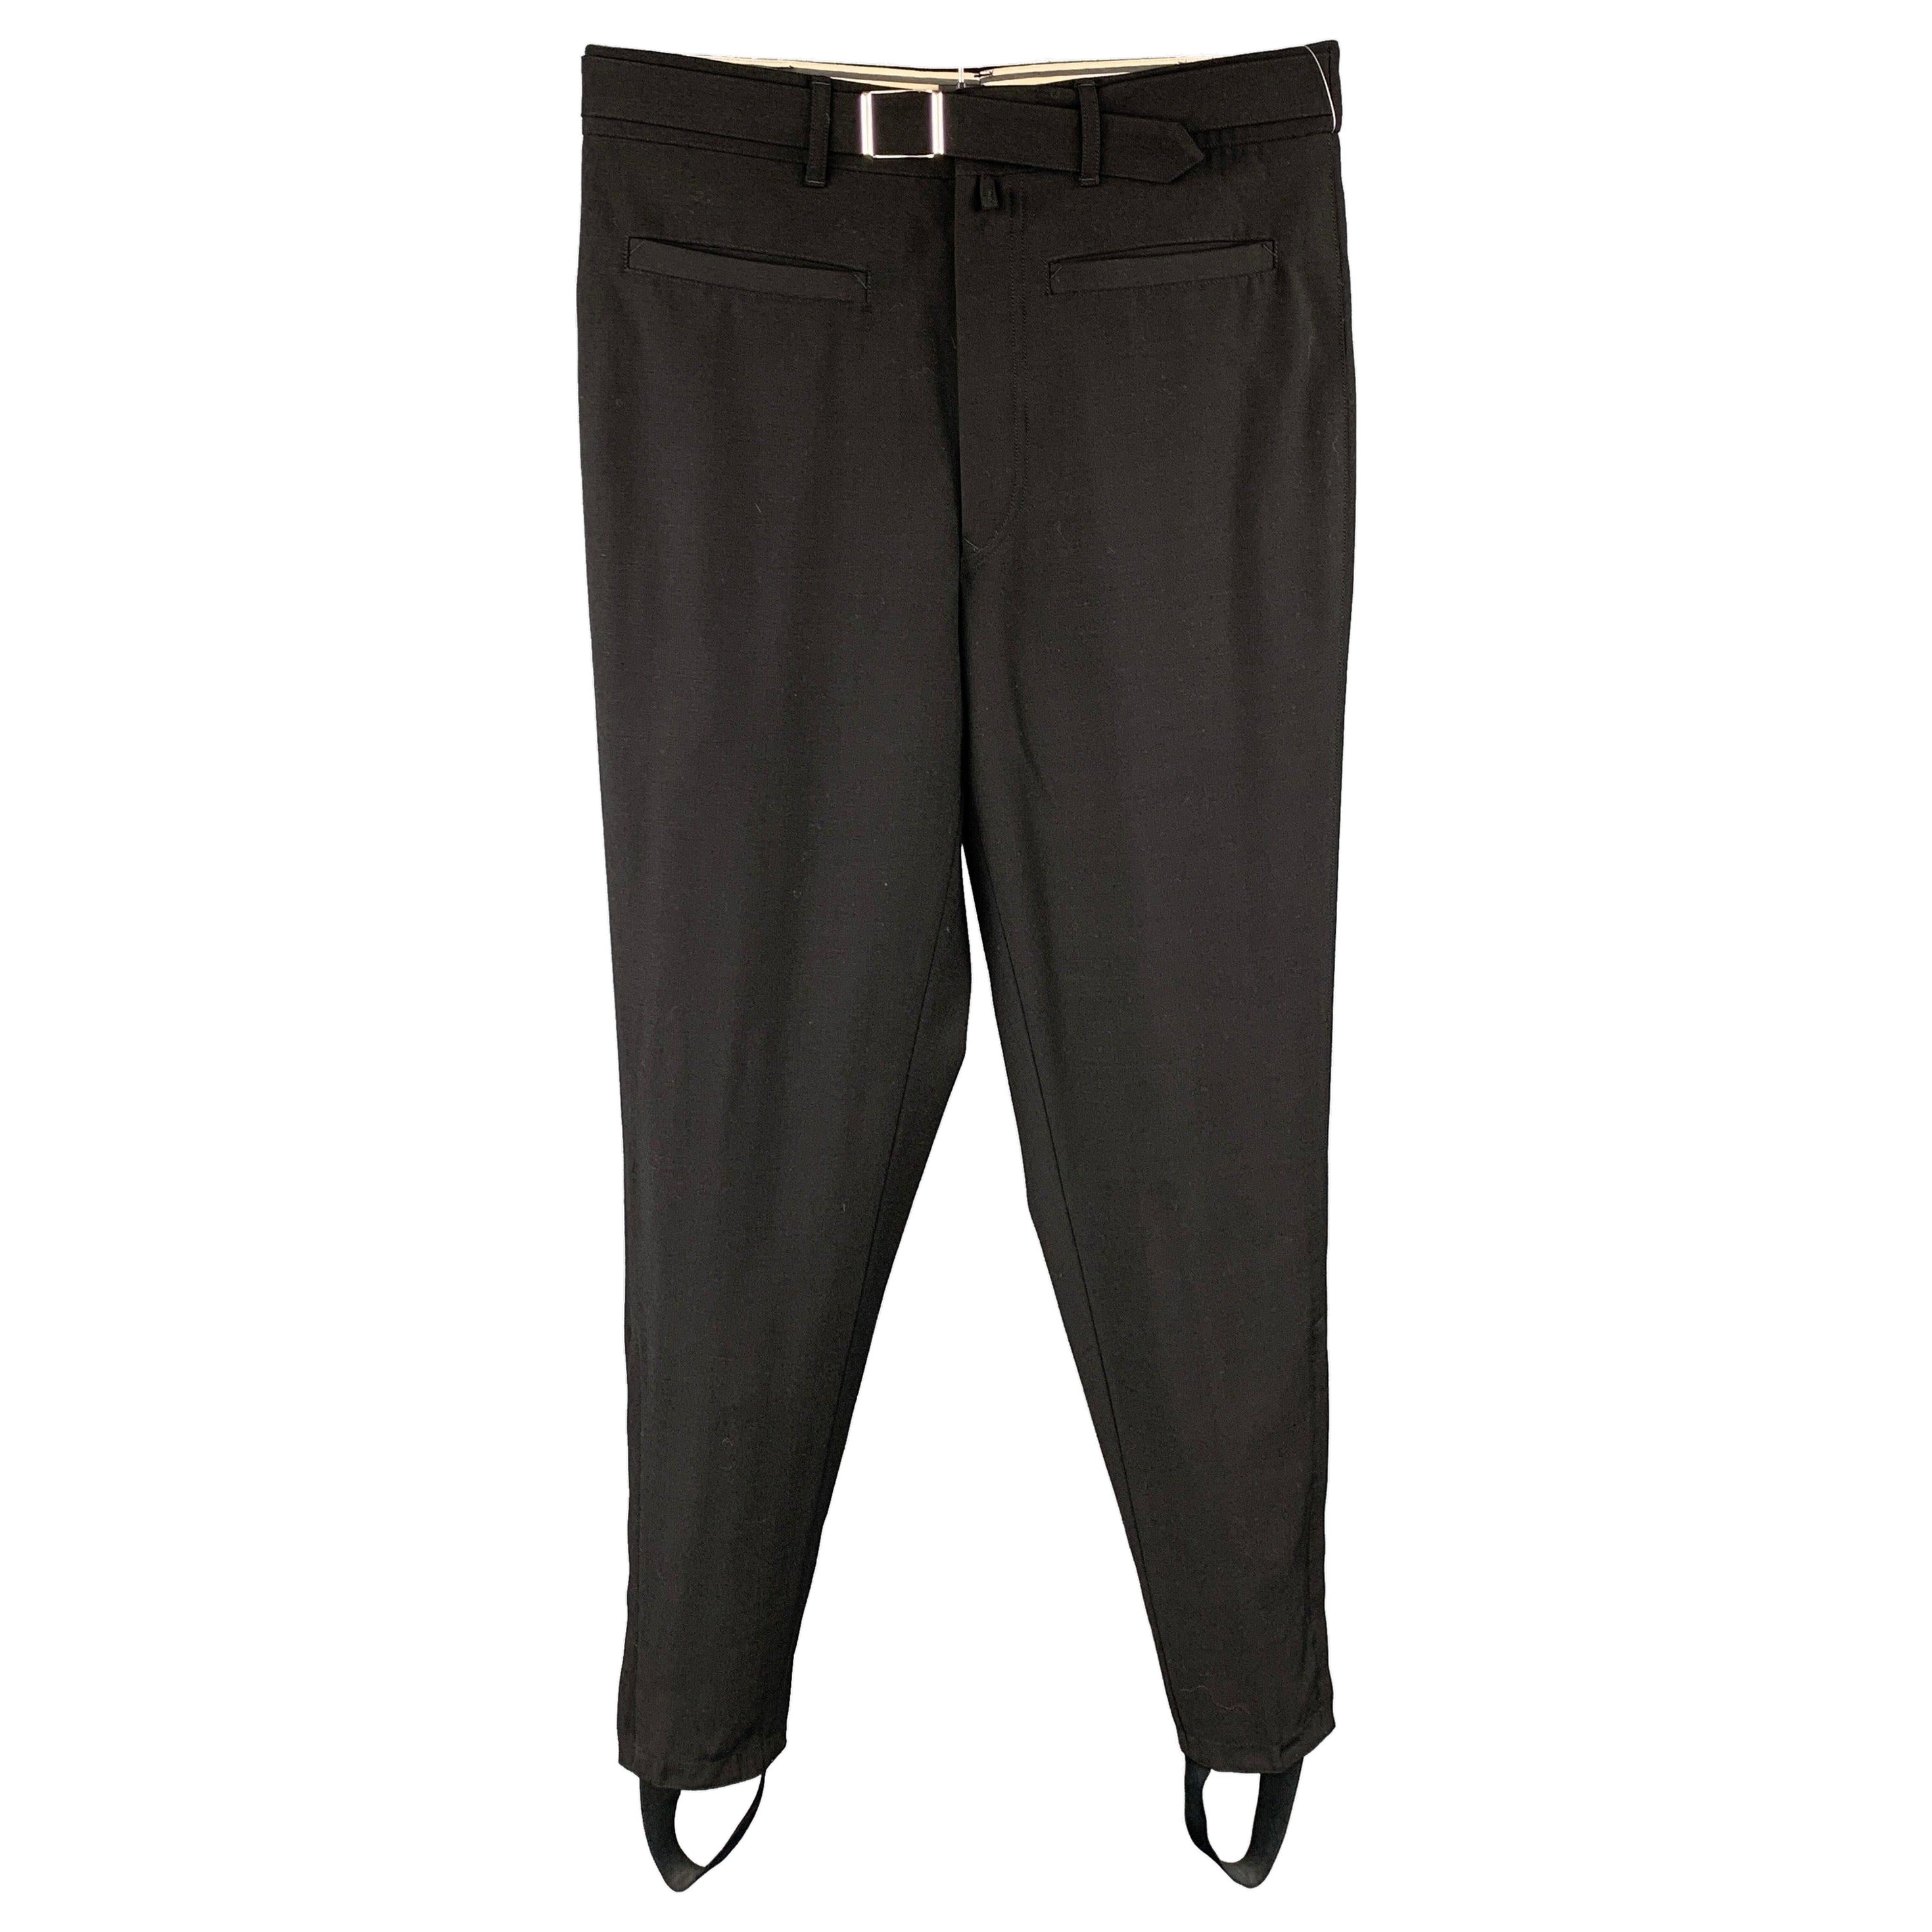 Vintage JEAN PAUL GAULTIER Size 34 Black Jodhpurs Dress Pants For Sale